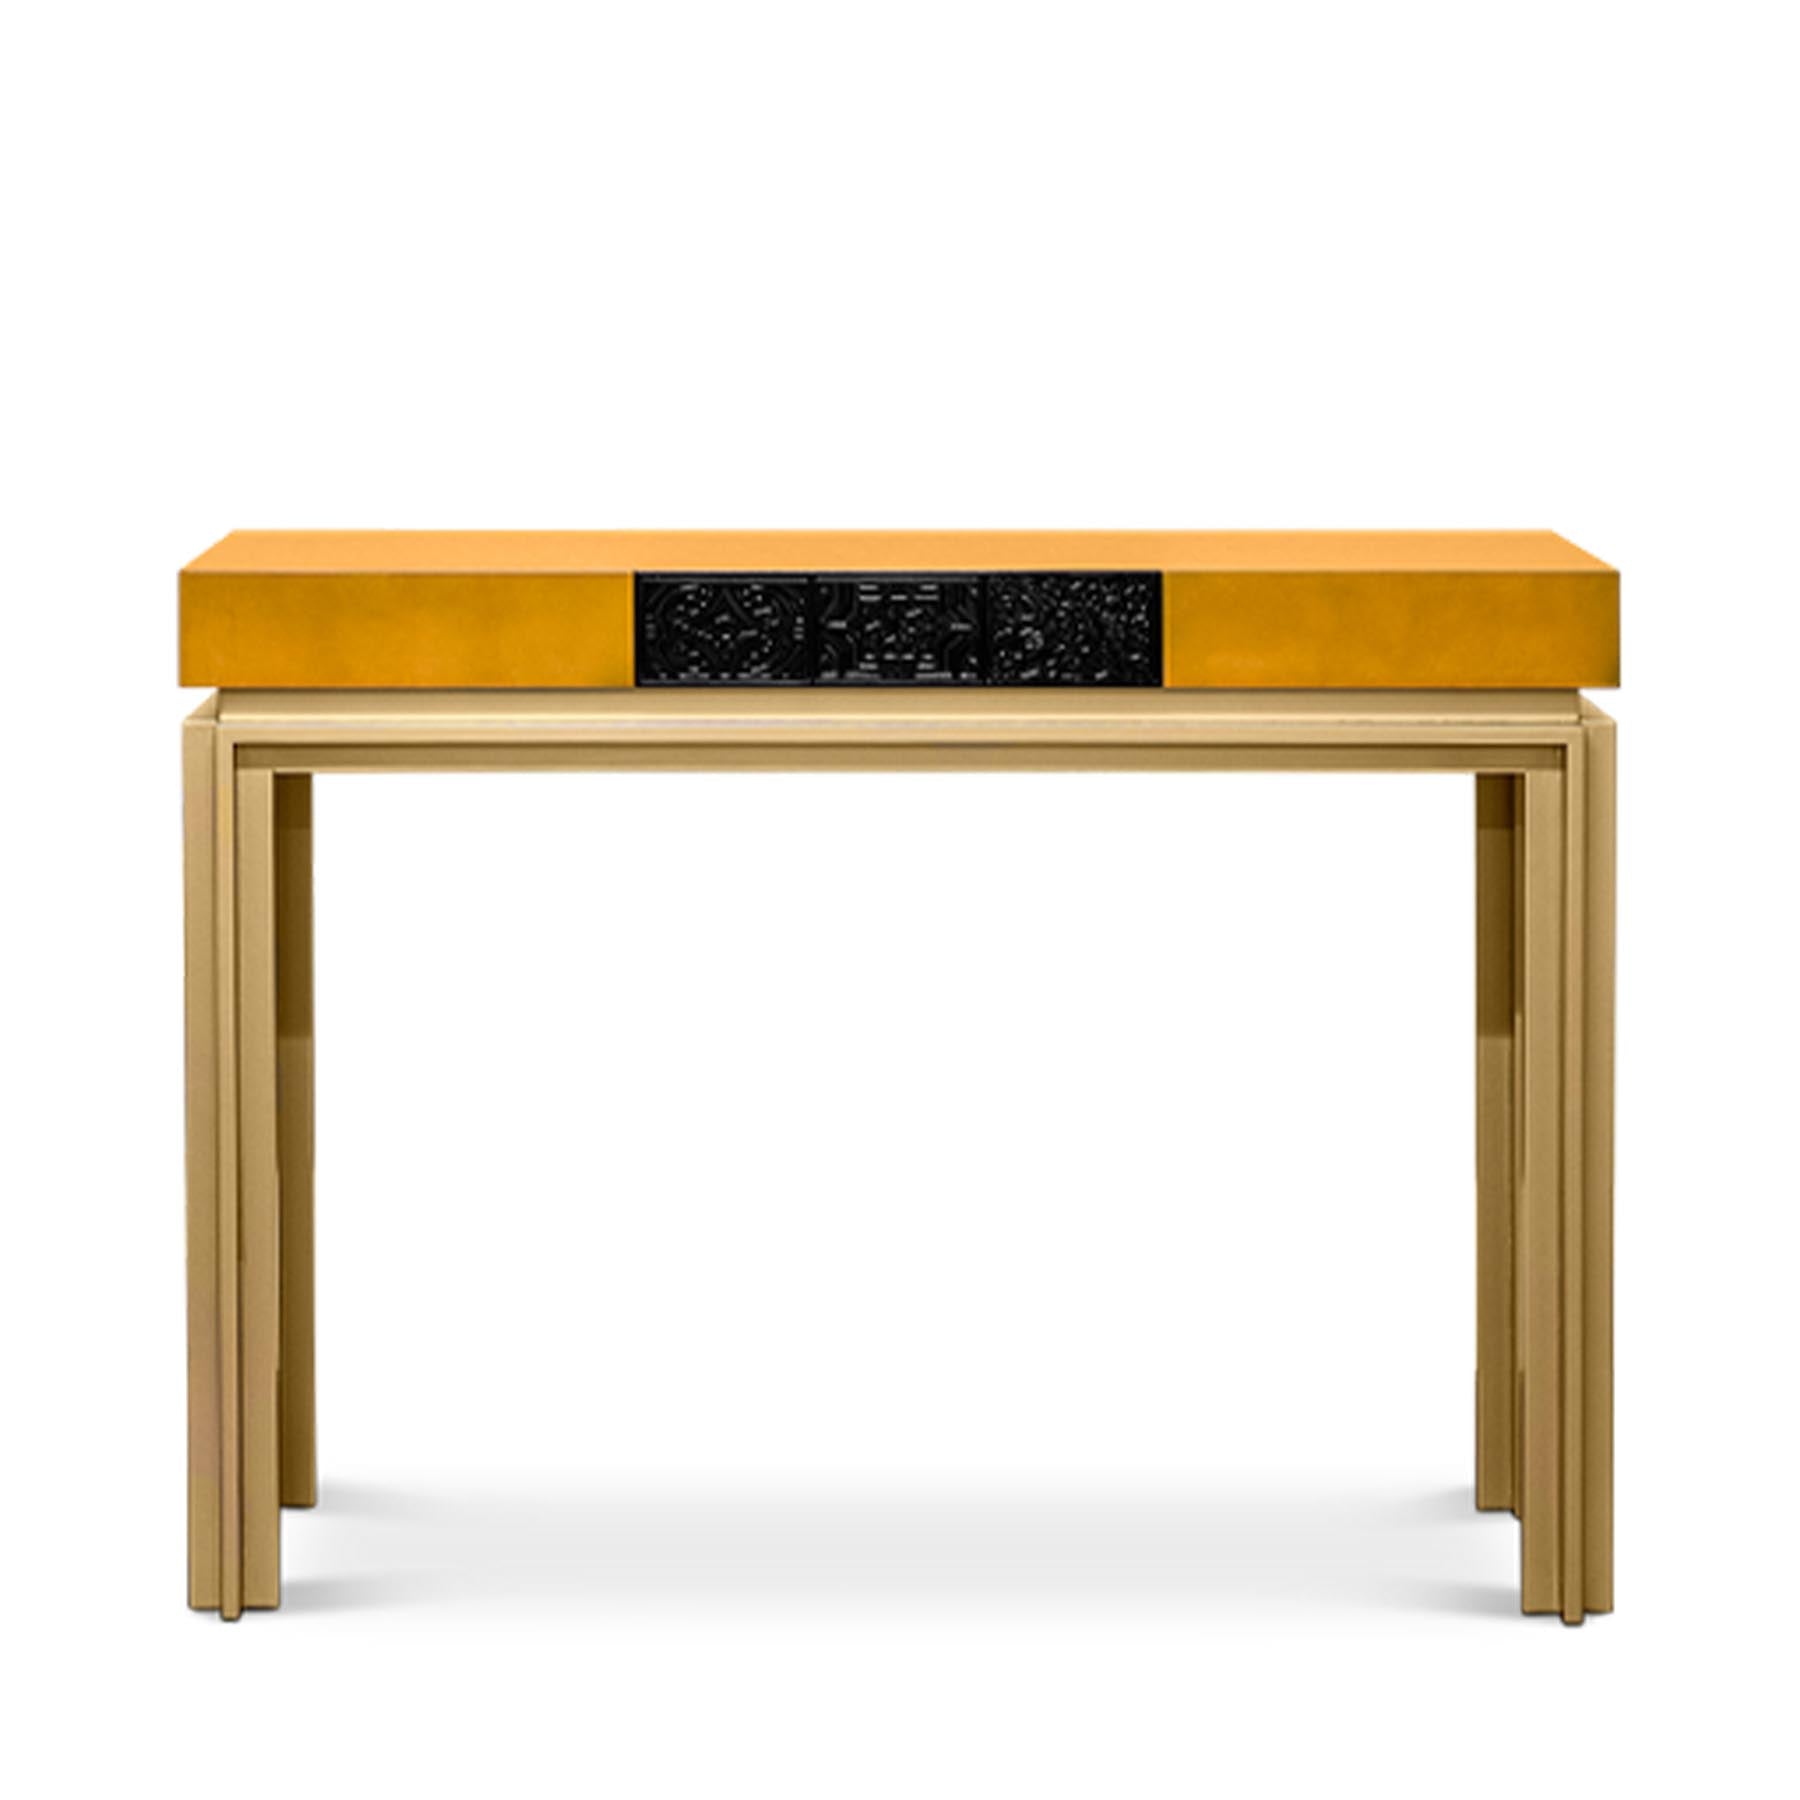 VIRTUOSO III - CONSOLE | Modern Furniture + Decor